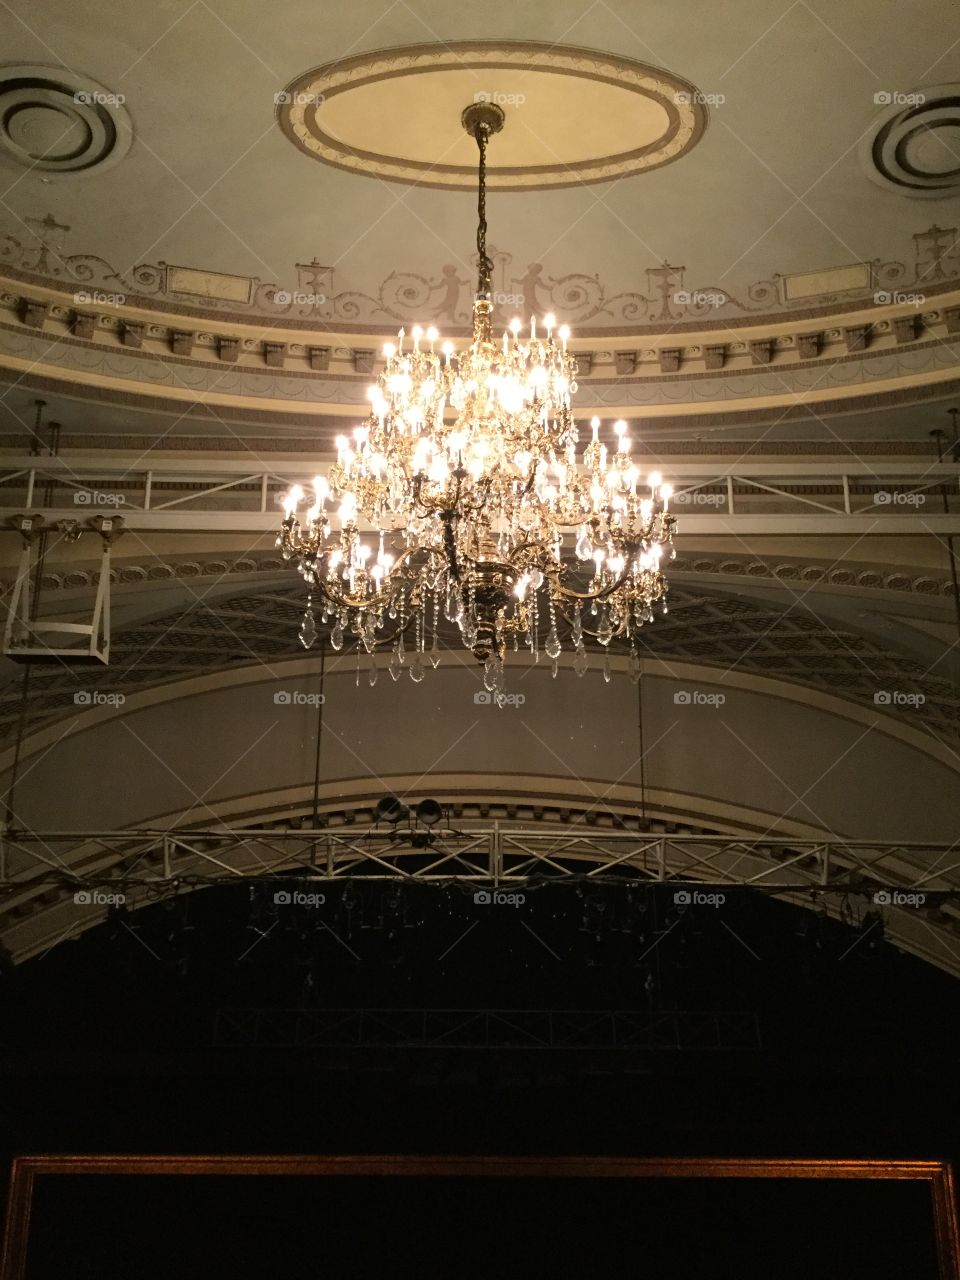 Ambassador theatre chandelier.  NY